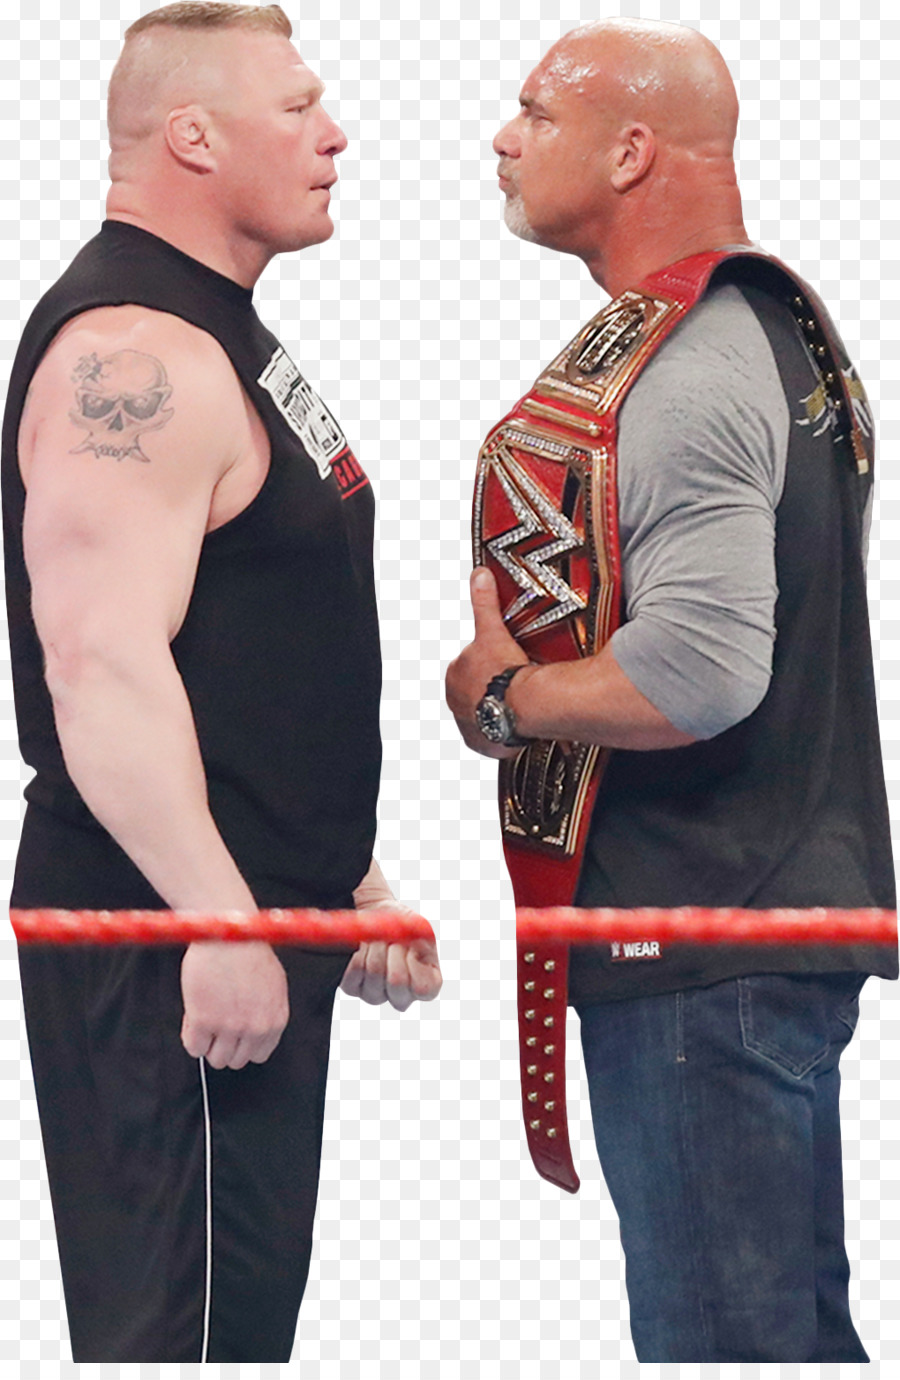 Brock Lesnar Roman Reigns WrestleMania 33 Professional Wrestler Professional wrestling - brock lesnar png download - 1020*1545 - Free Transparent  png Download.